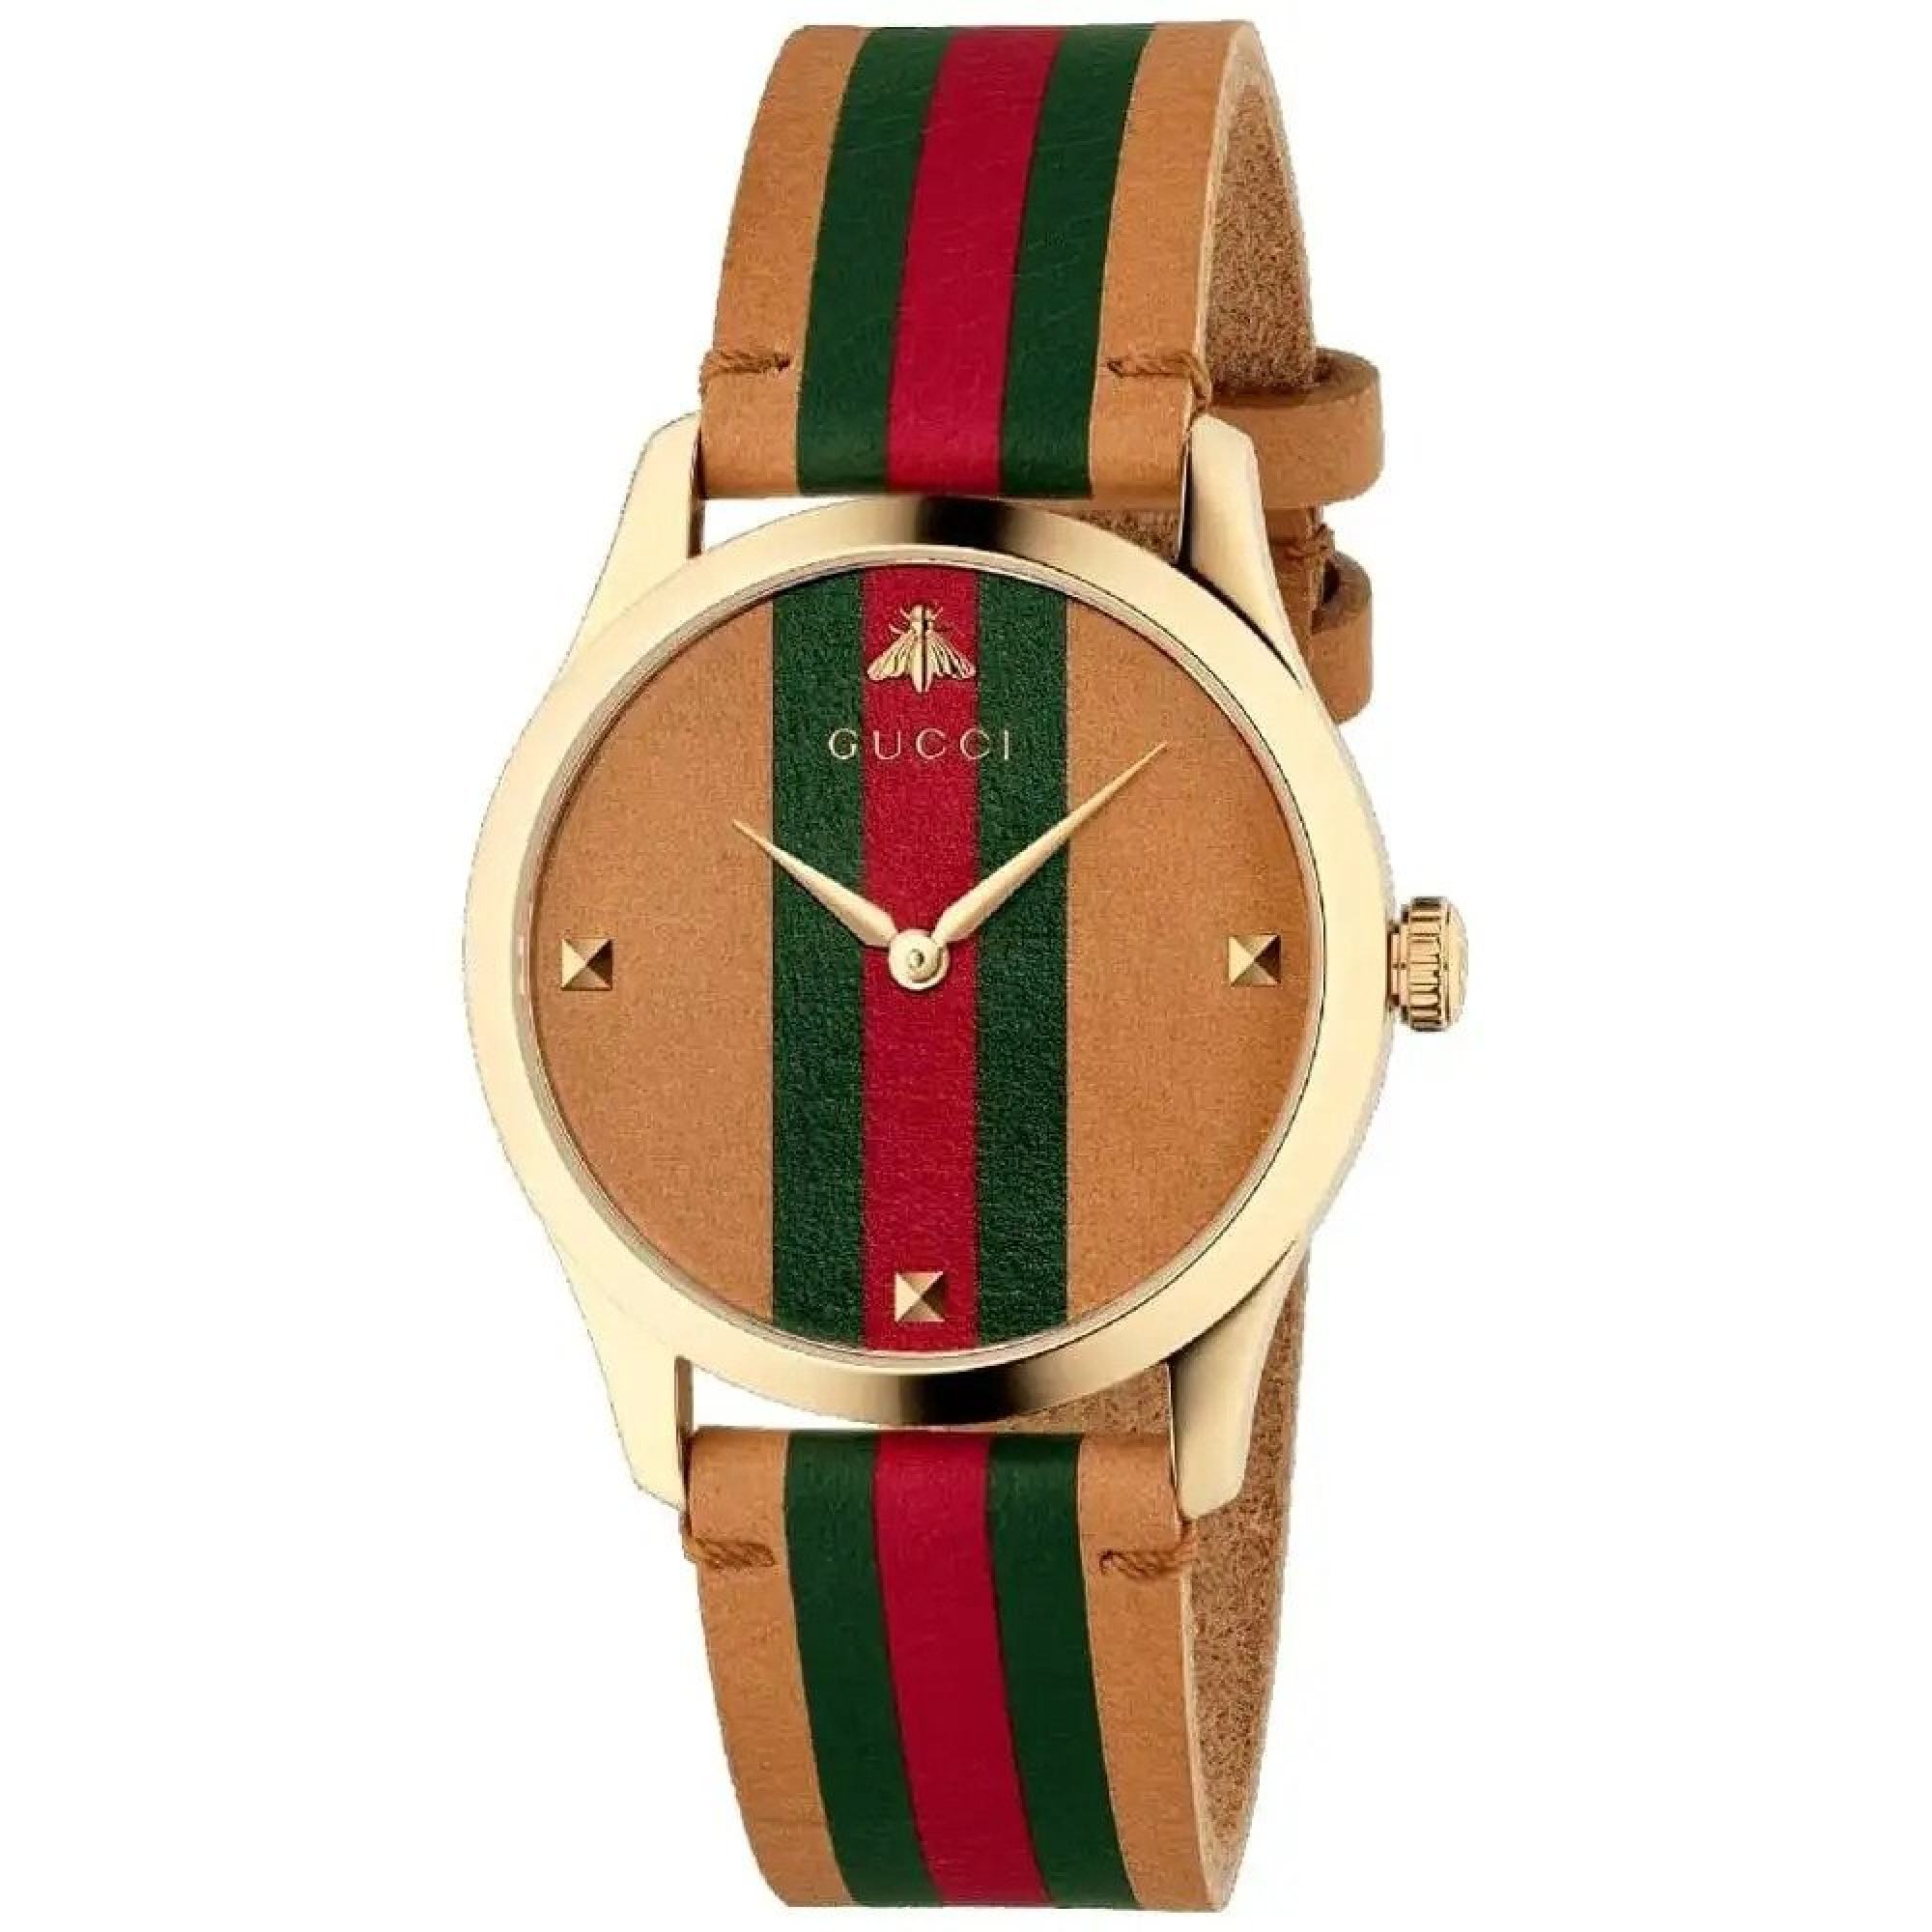 Louis Vuitton Men Watch - For Sale on 1stDibs  louis vuitton watches men, louis  vuitton watch men, louis vuitton men's watch